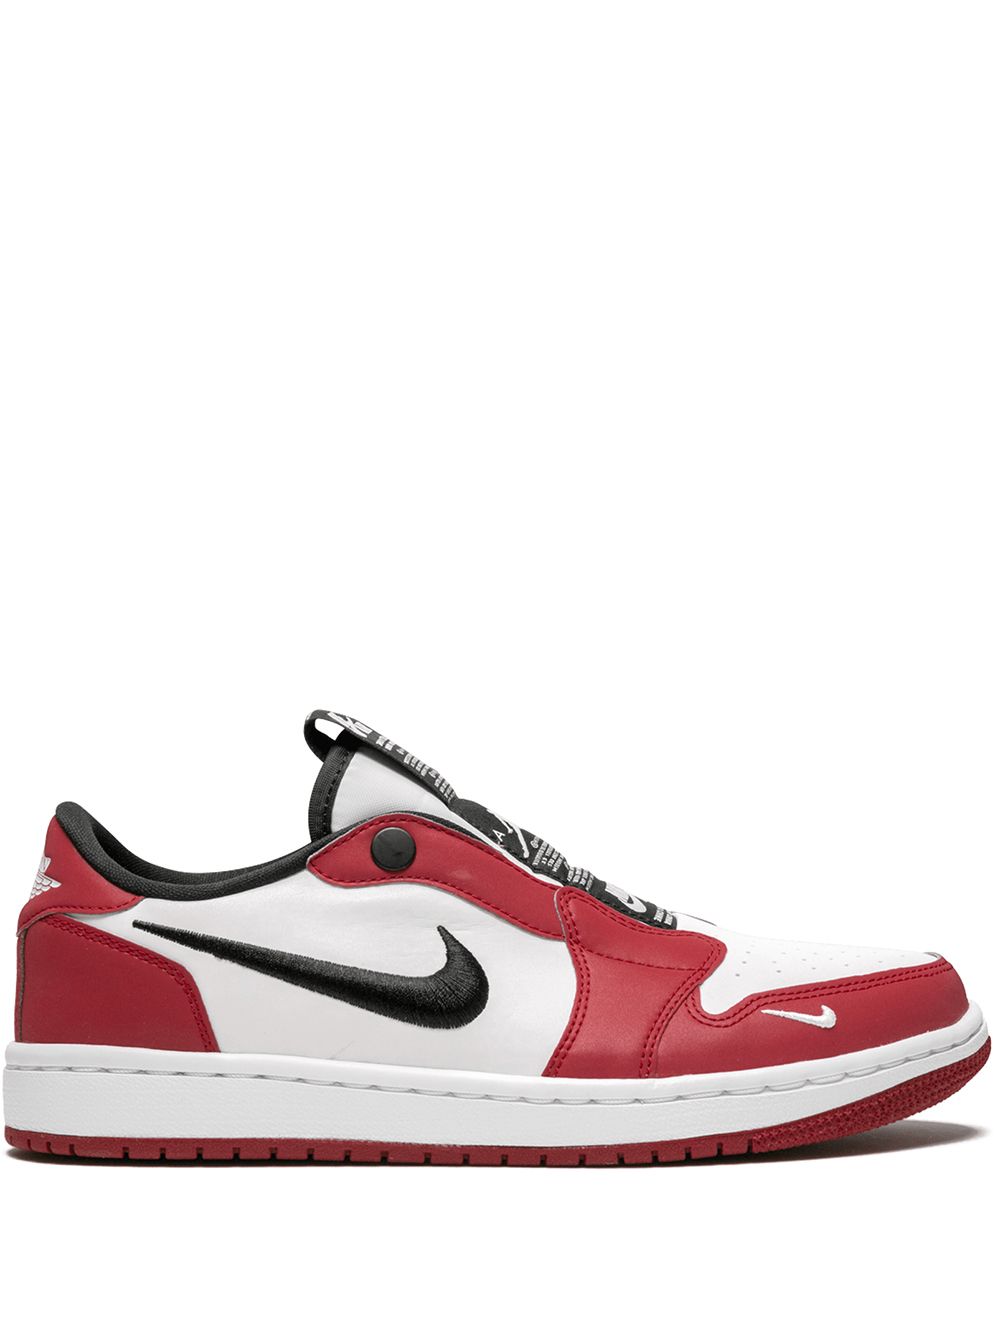 Jordan Air Jordan 1 Low Slip NRG "Slip Chicago" sneakers - Red von Jordan